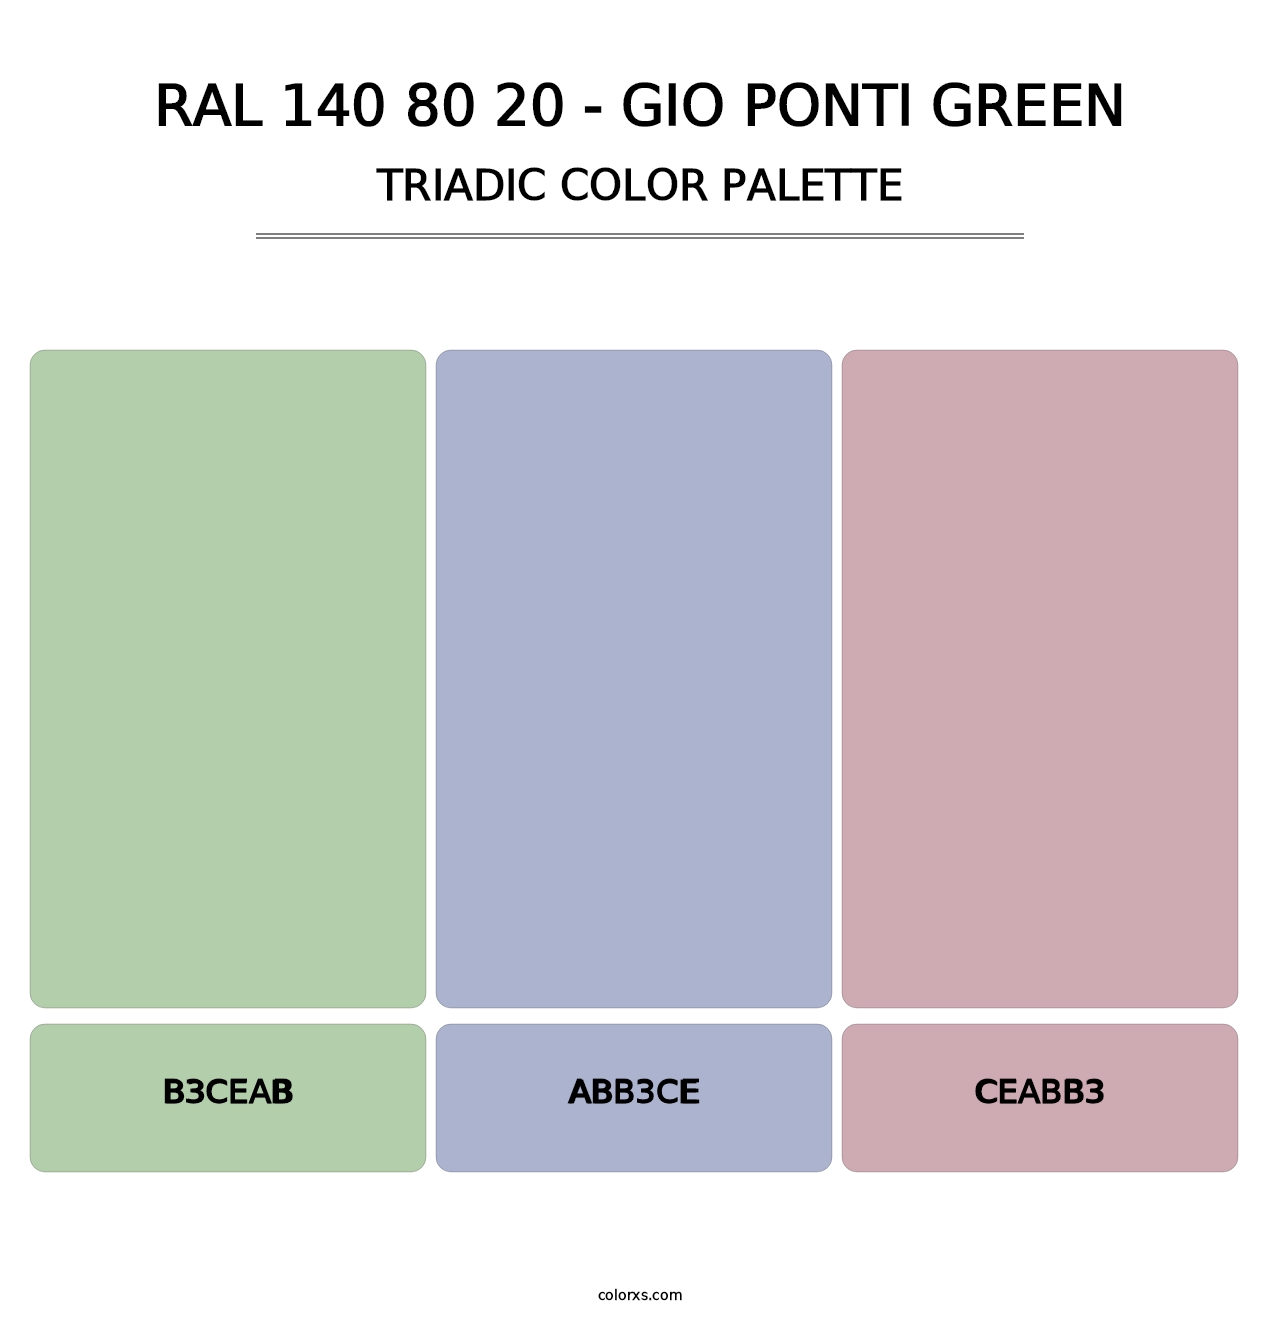 RAL 140 80 20 - Gio Ponti Green - Triadic Color Palette